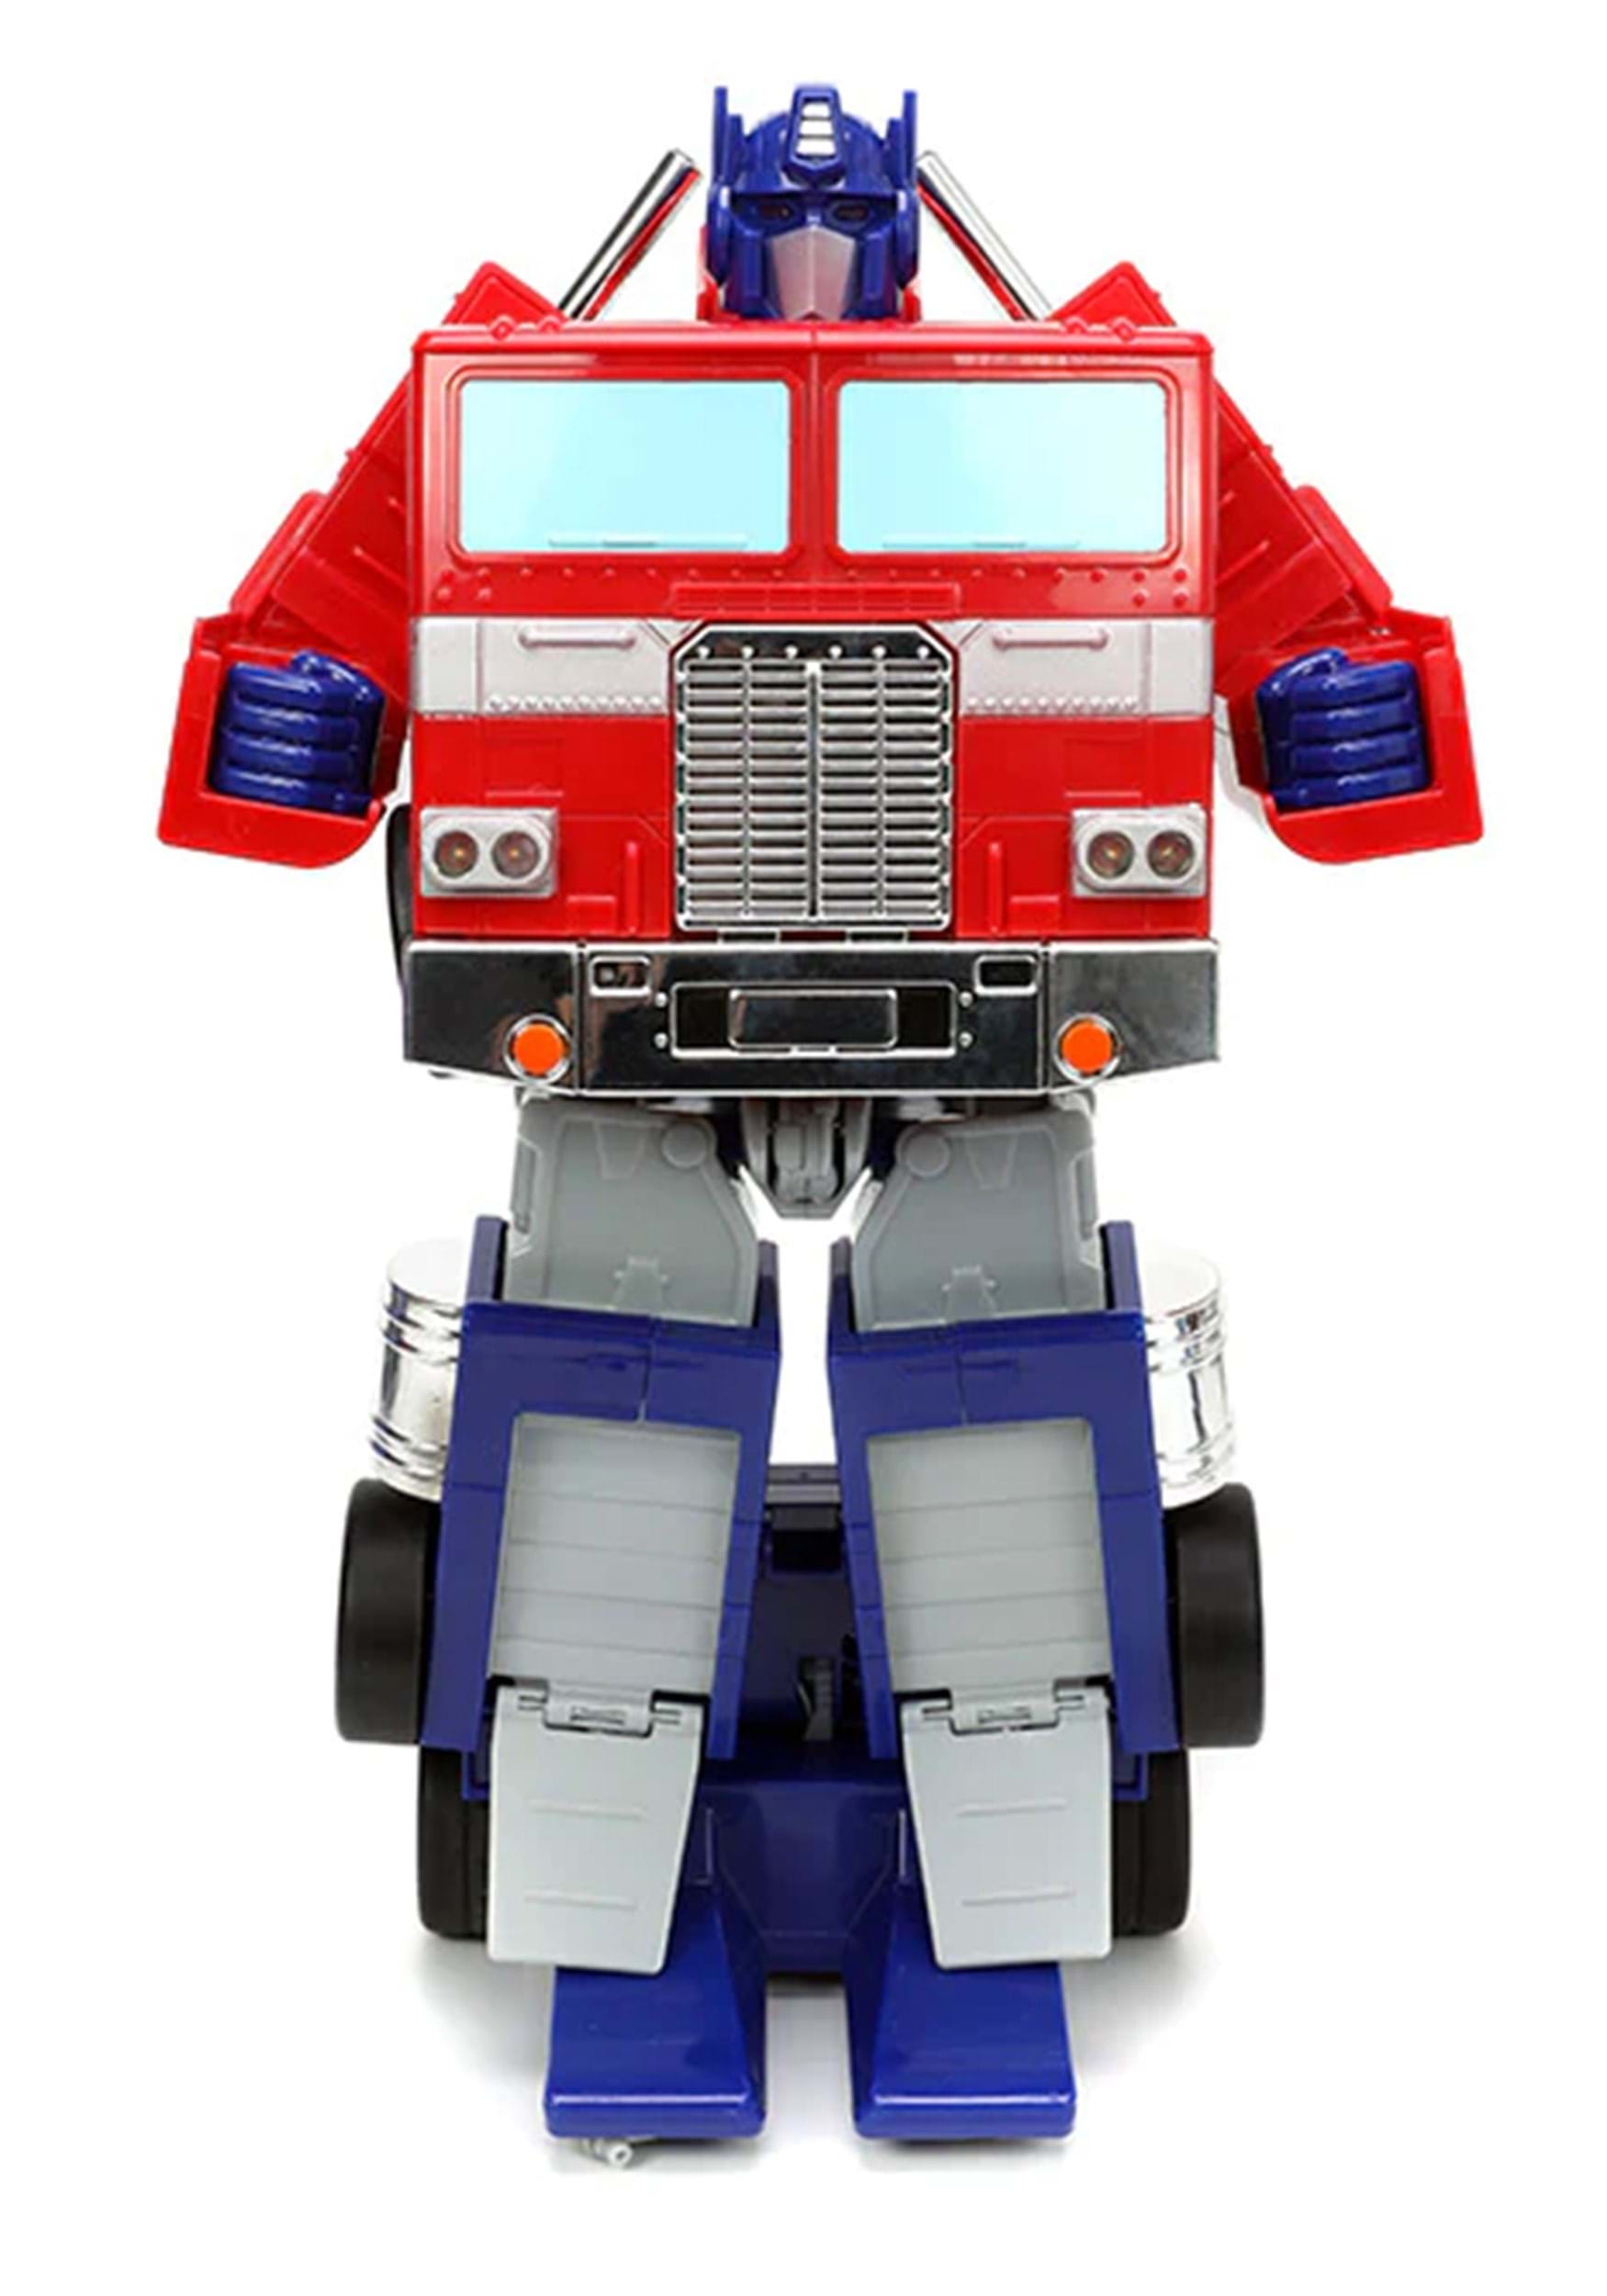 Transformers Optimus Prime Remote Control Converting Vehicle